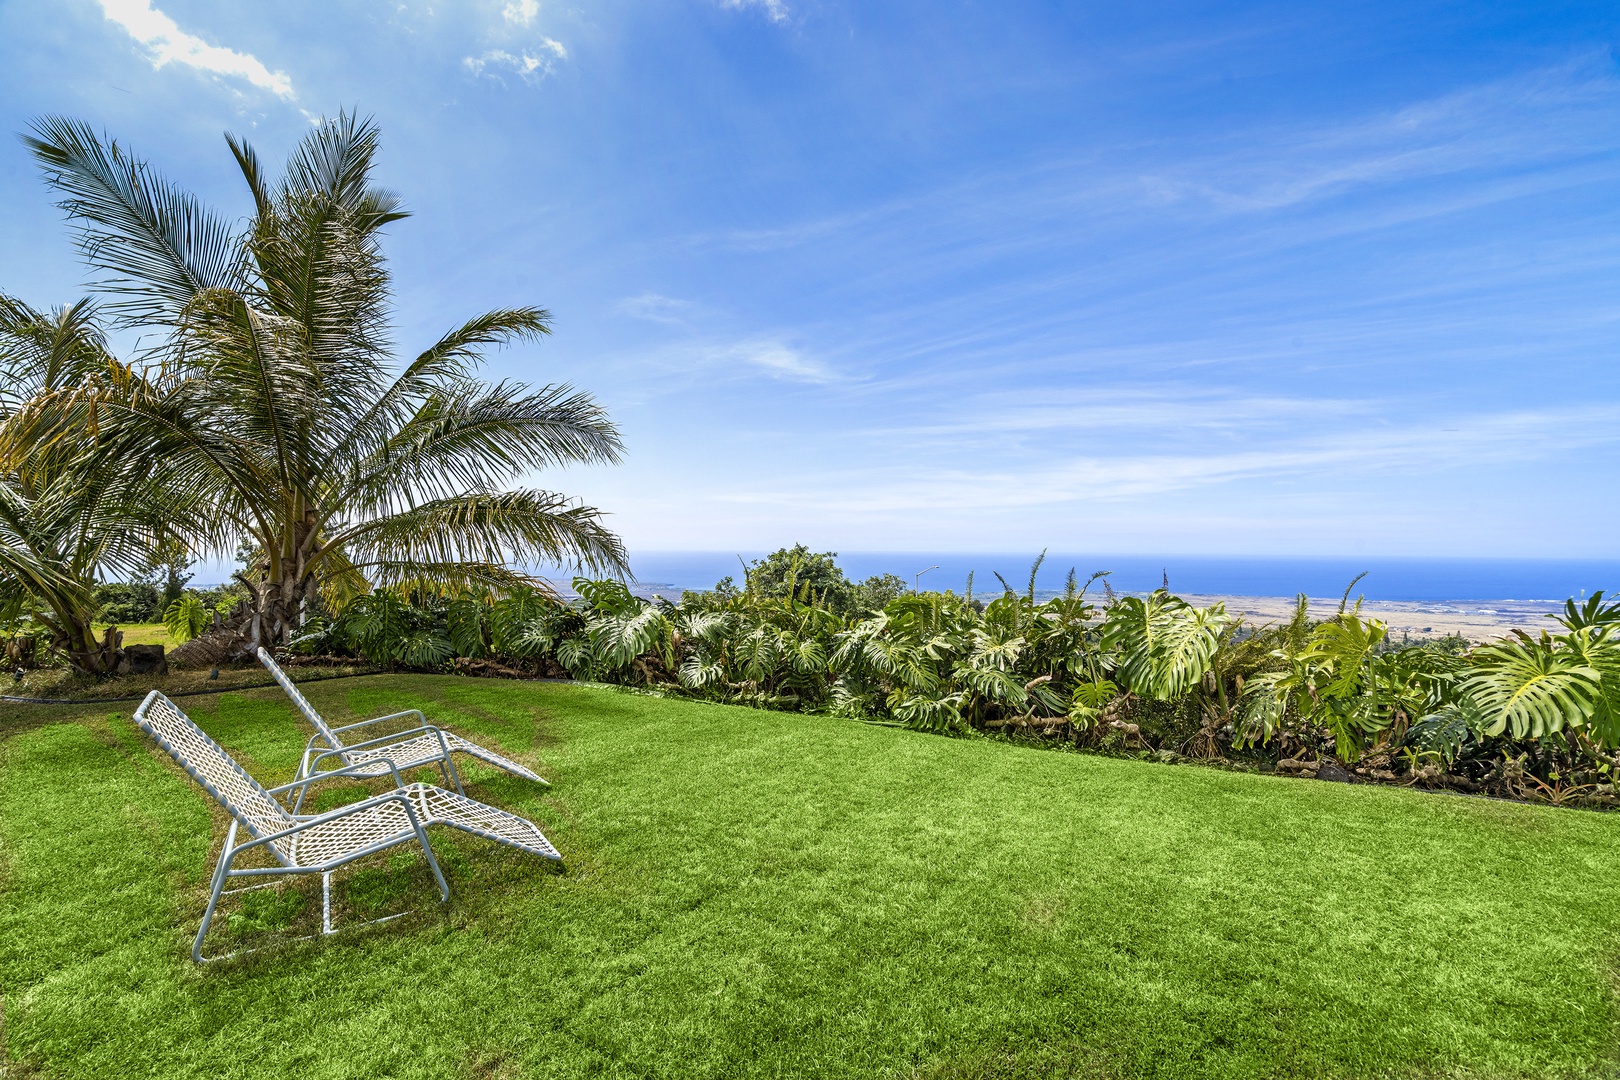 Kailua Kona Vacation Rentals, Piko Nani - Lounge on the lawn with breathtaking views!